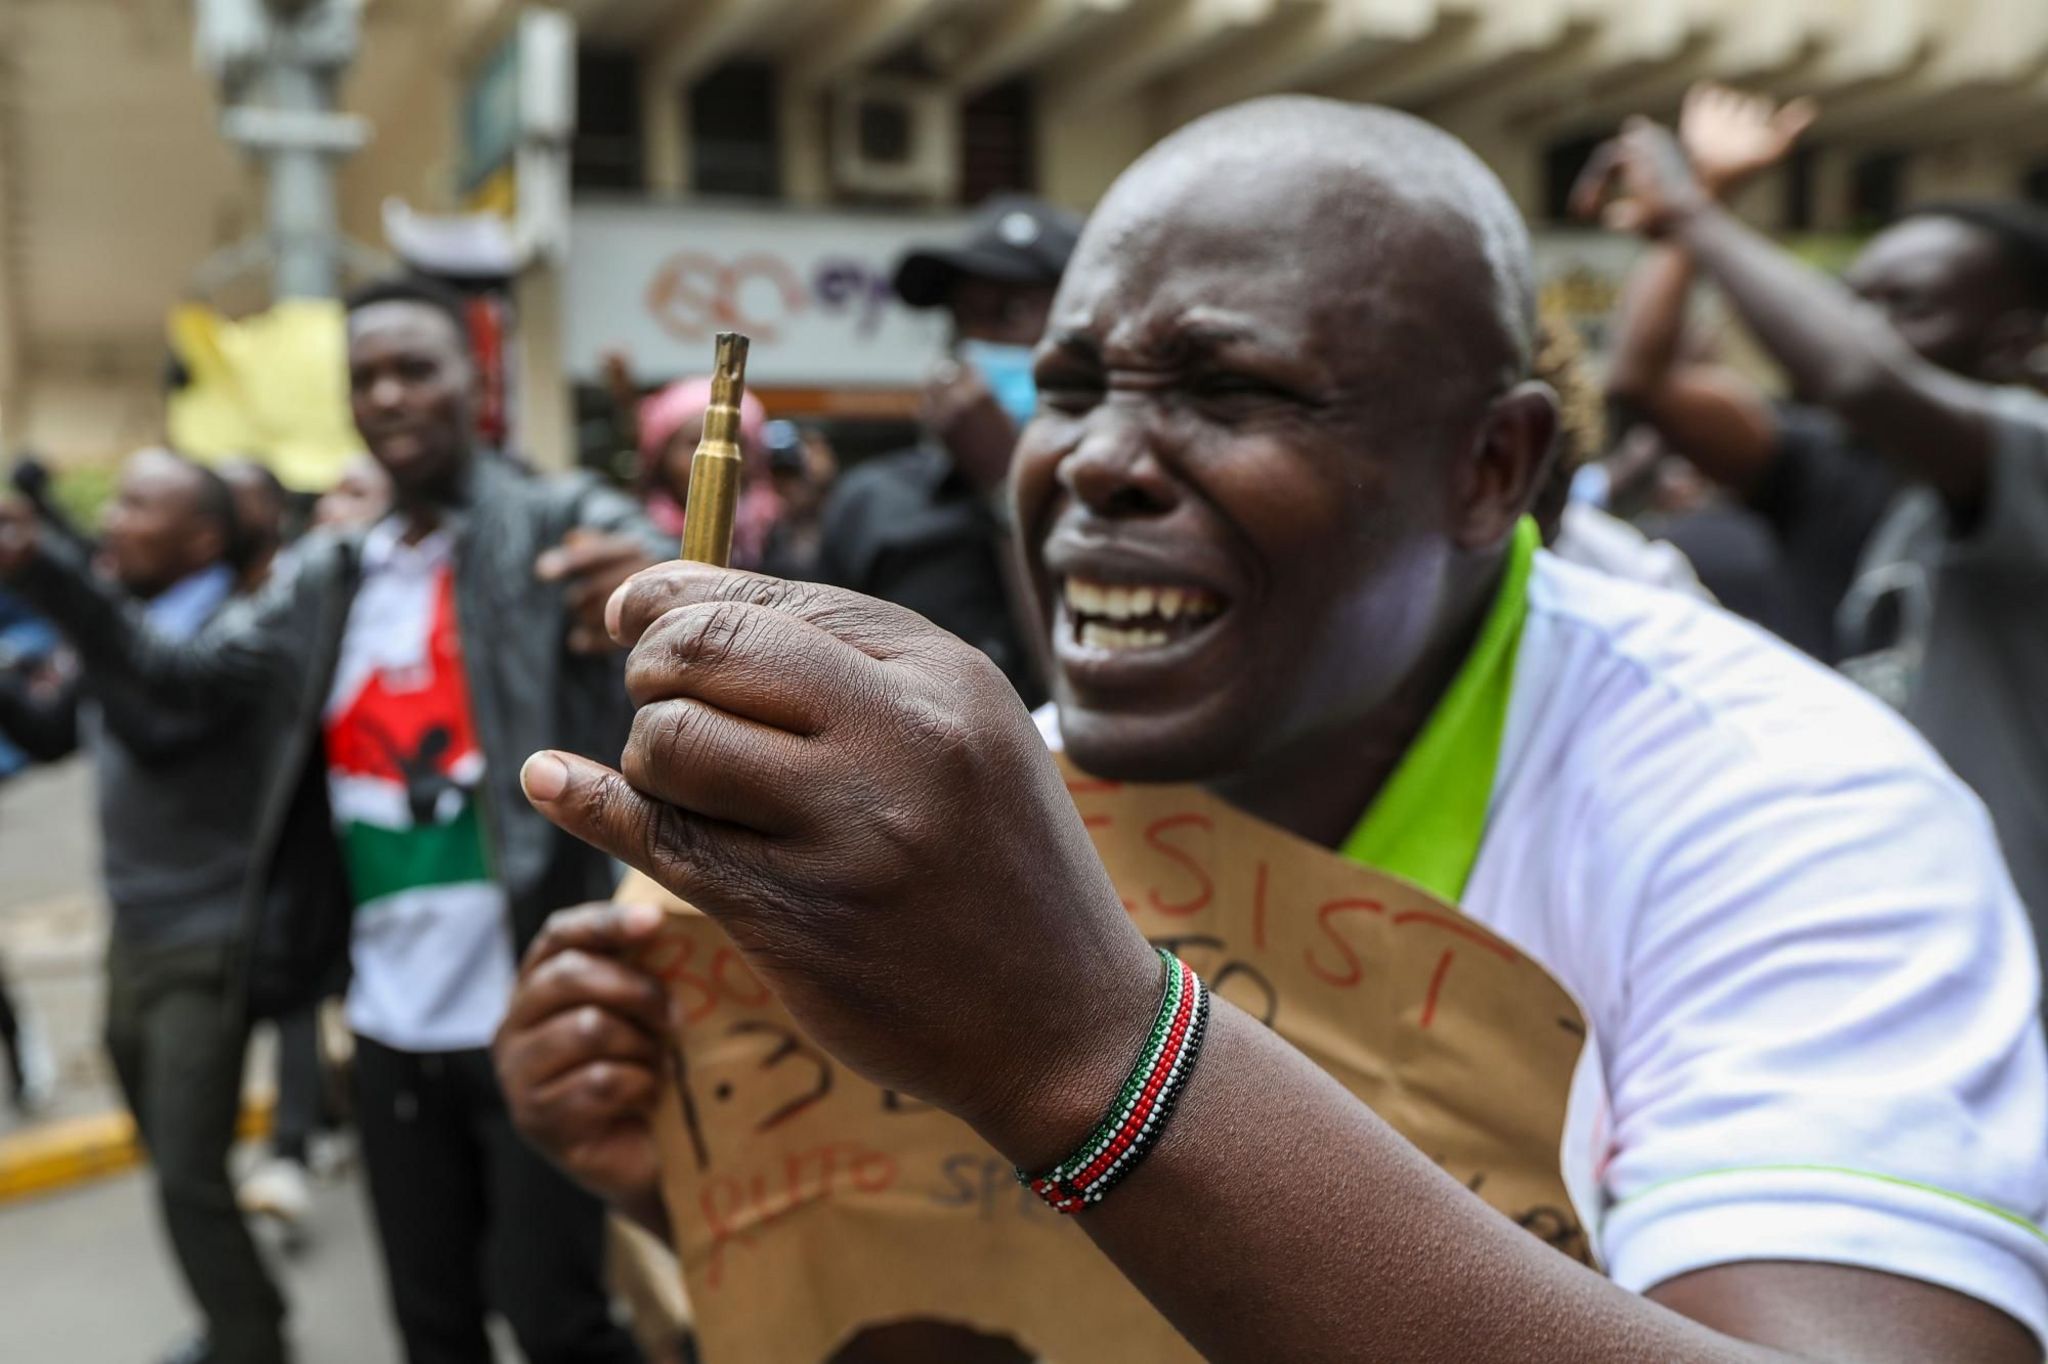 A Kenyan protester holds a spent bullet